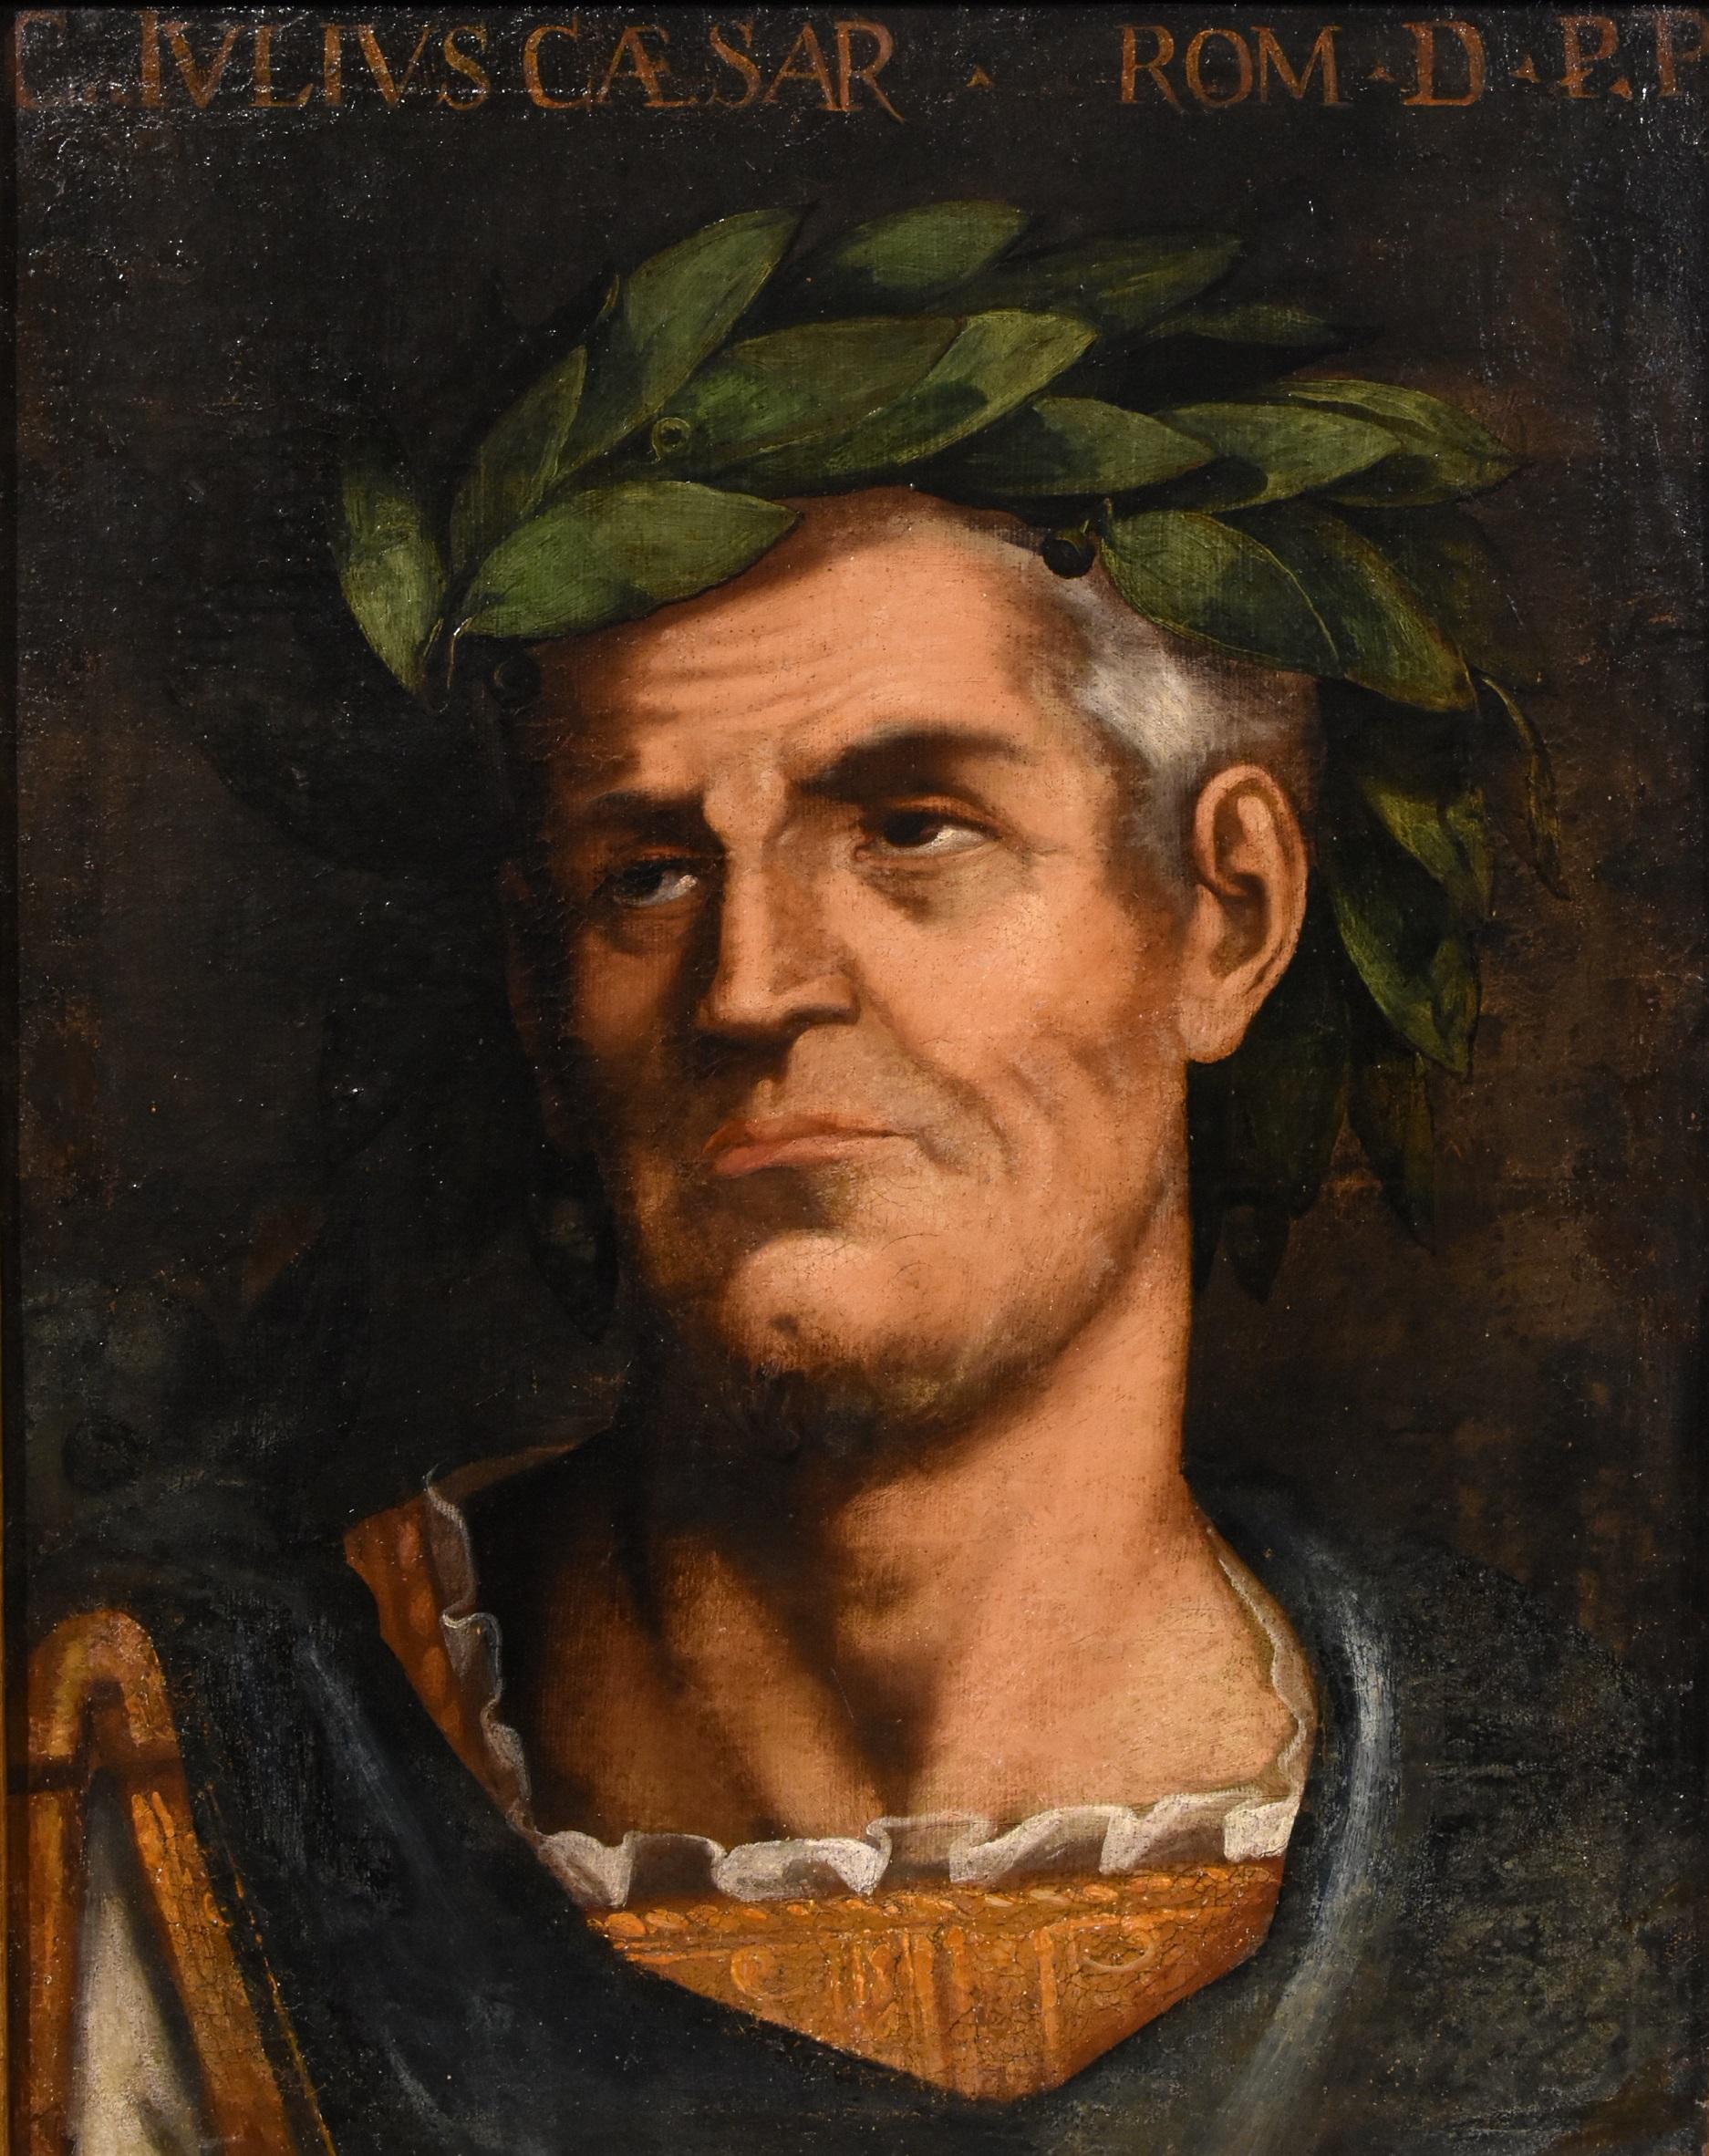 Tiziano Vecellio (Pieve di Cadore 1490 - Venedig 1576), Anhänger von
Porträt des Kaisers Julius Caesar (Rom 100 v. Chr. - 44 v. Chr.), darüber die Inschrift C. IVLIVS. CAESAR
Porträt des Kaisers Octavian Augustus (Rom 63 v. Chr. - 14 v. Chr.), oben